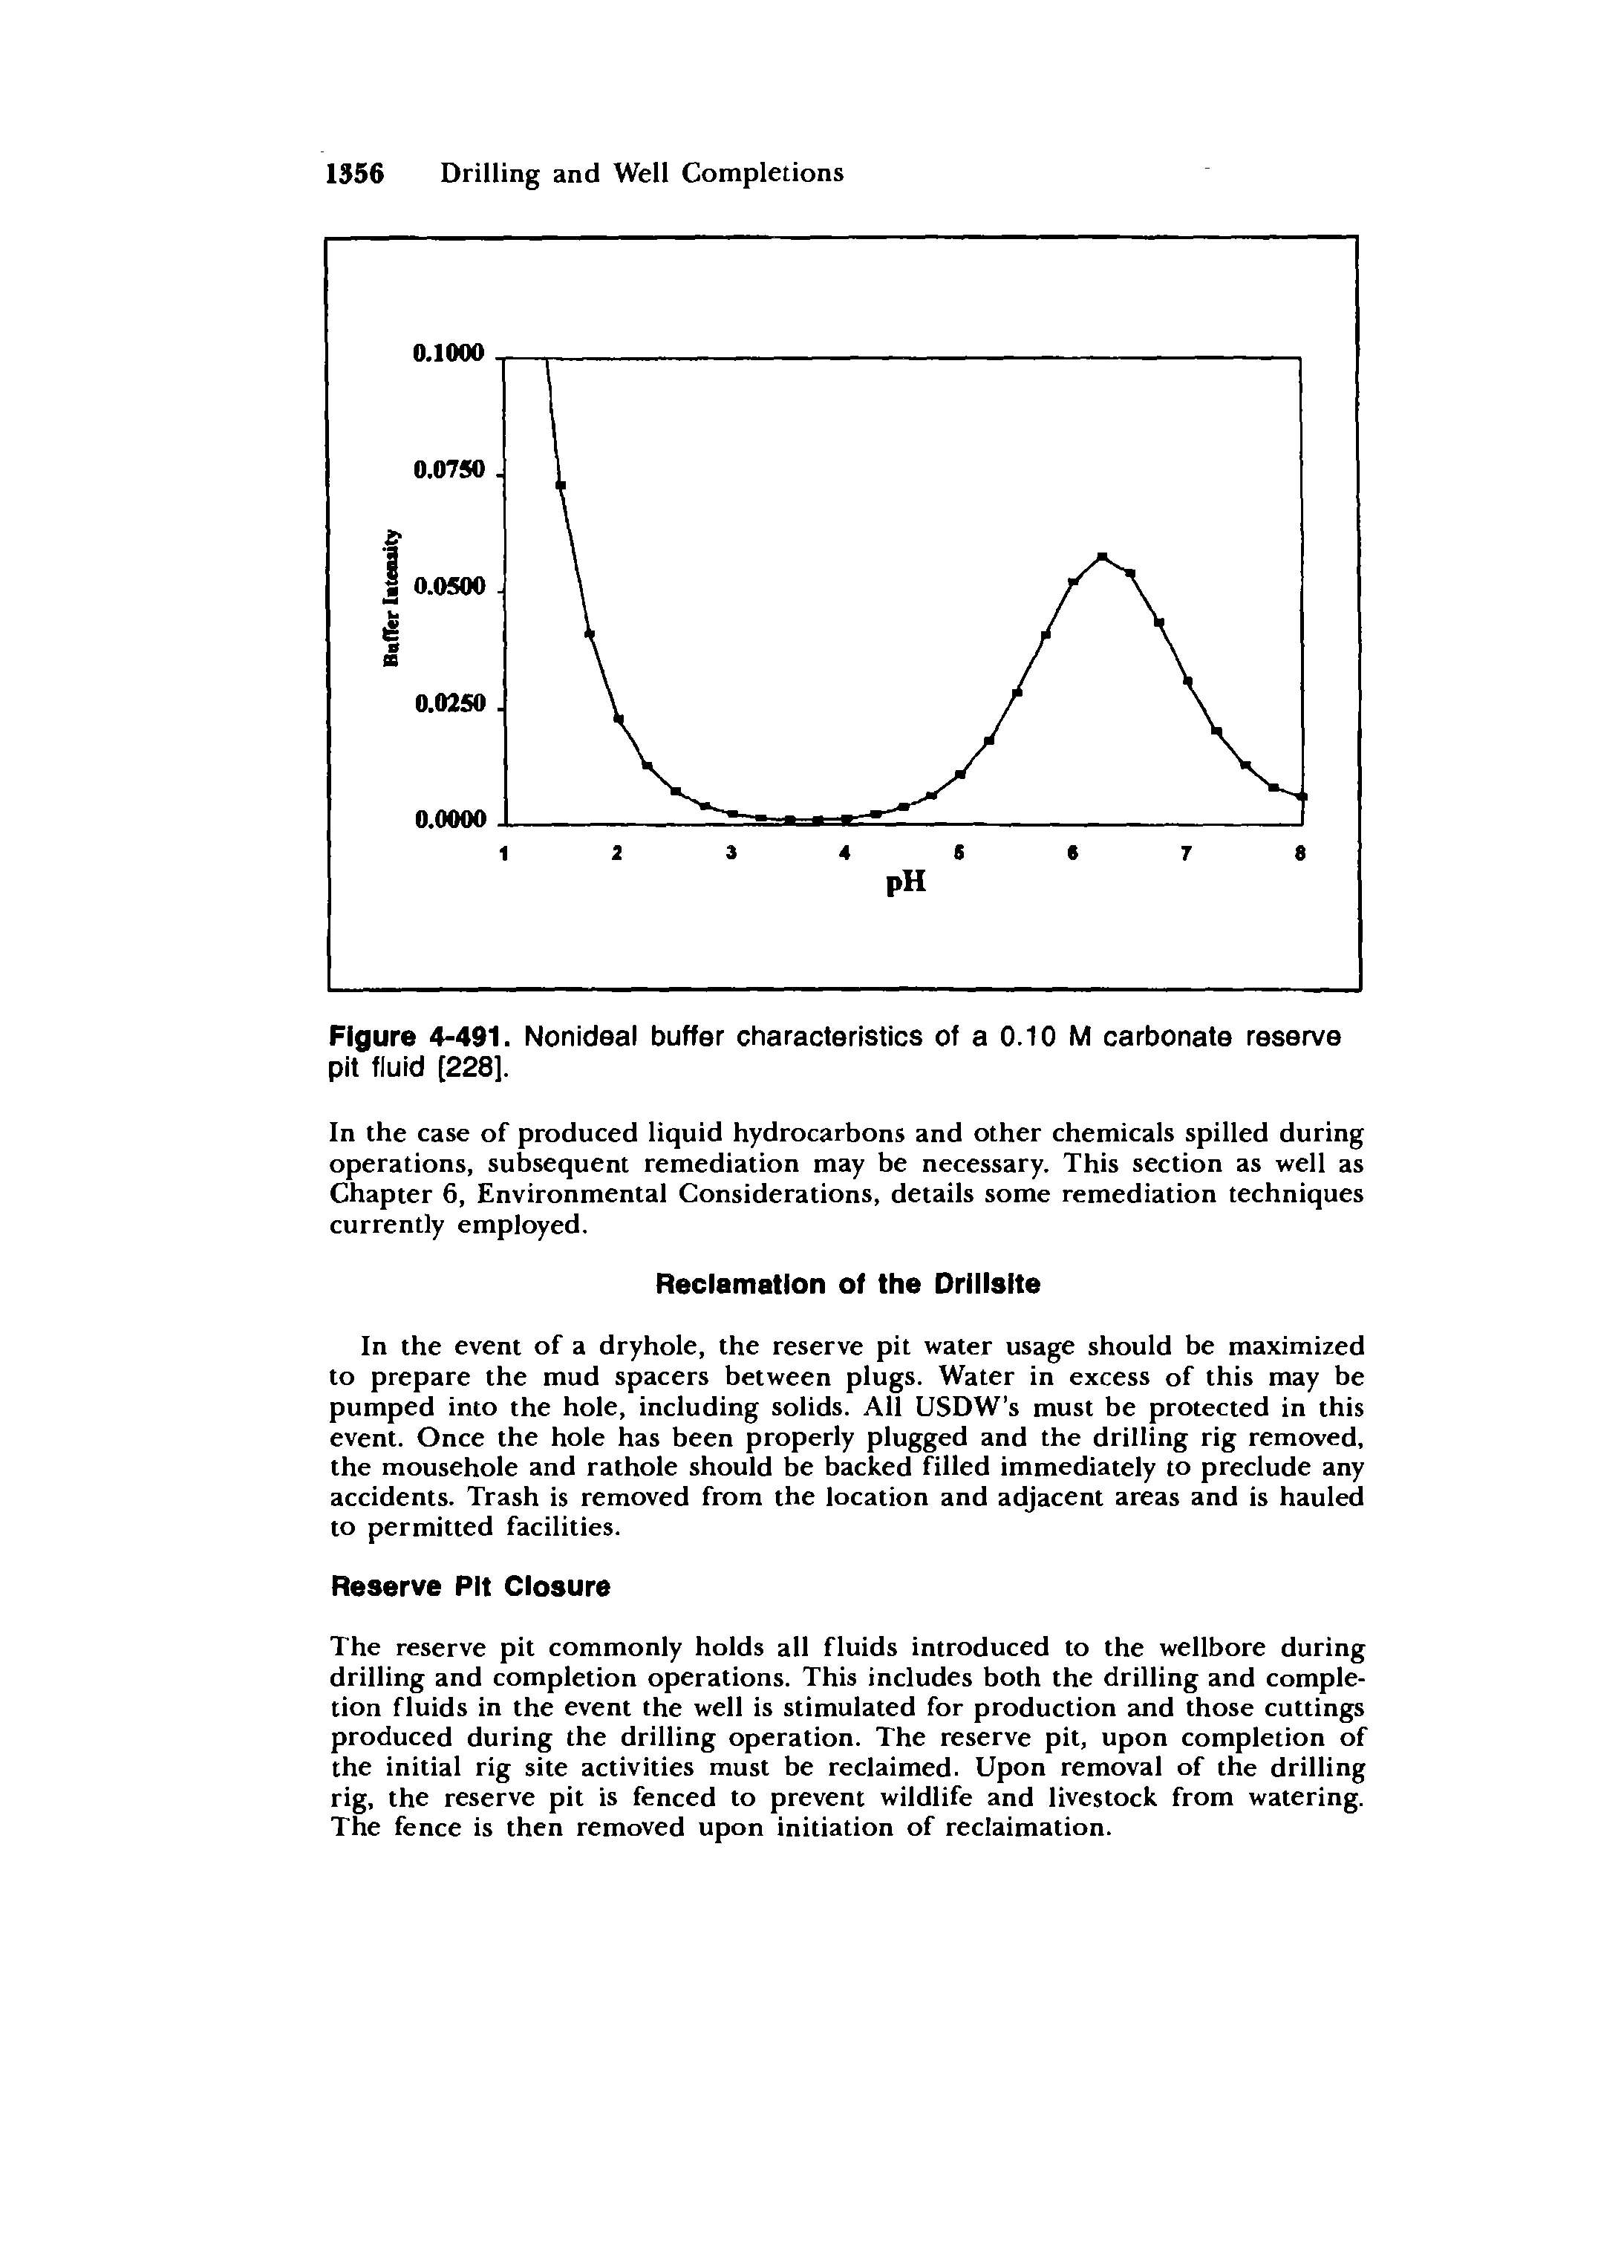 Figure 4-491. Nonideal buffer characteristics of a 0.10 M carbonate reserve pit fluid [228].